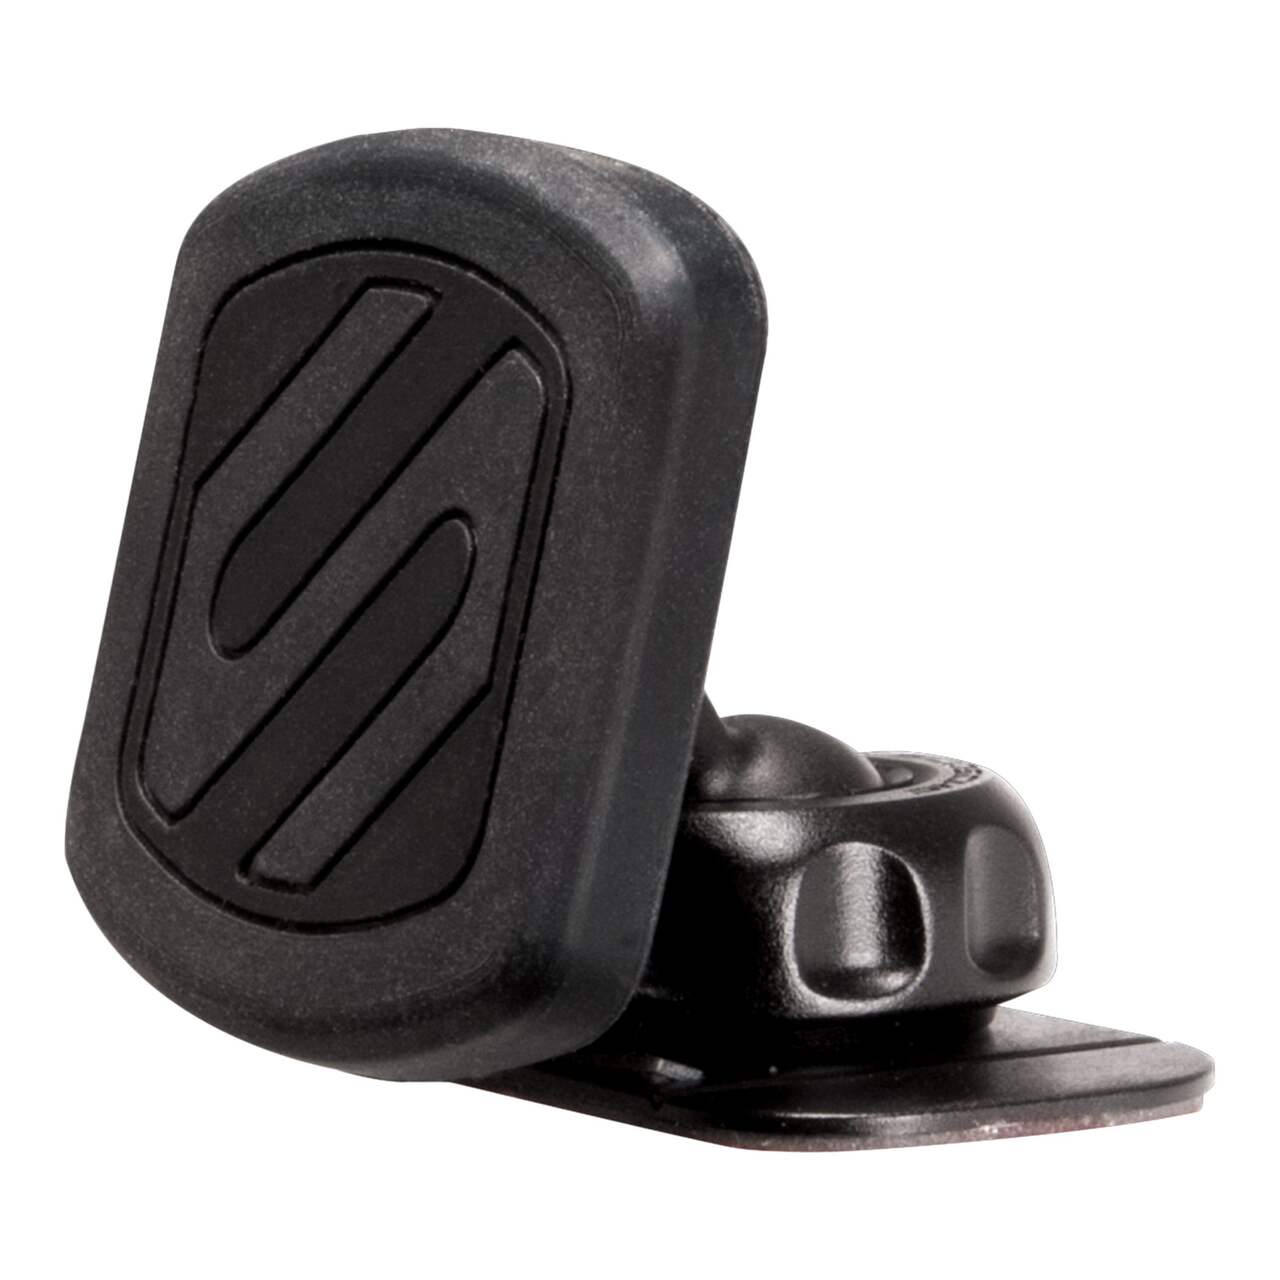 Scosche MAGDMB Magnetic MagicMount Car Phone Holder, Black